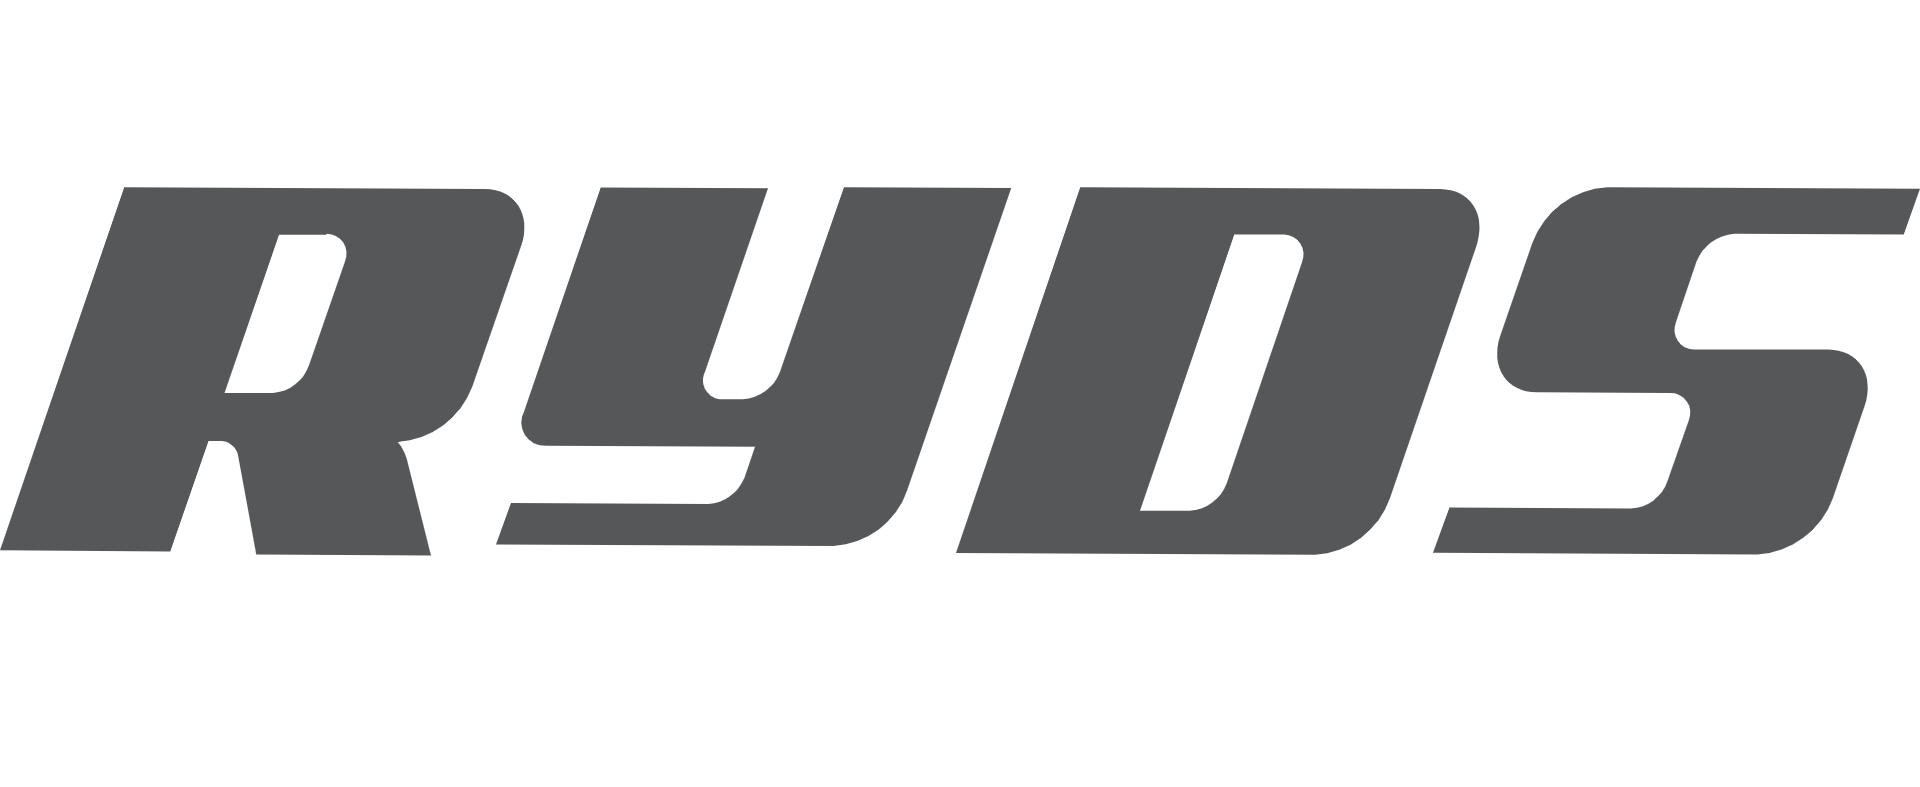 ryds logo